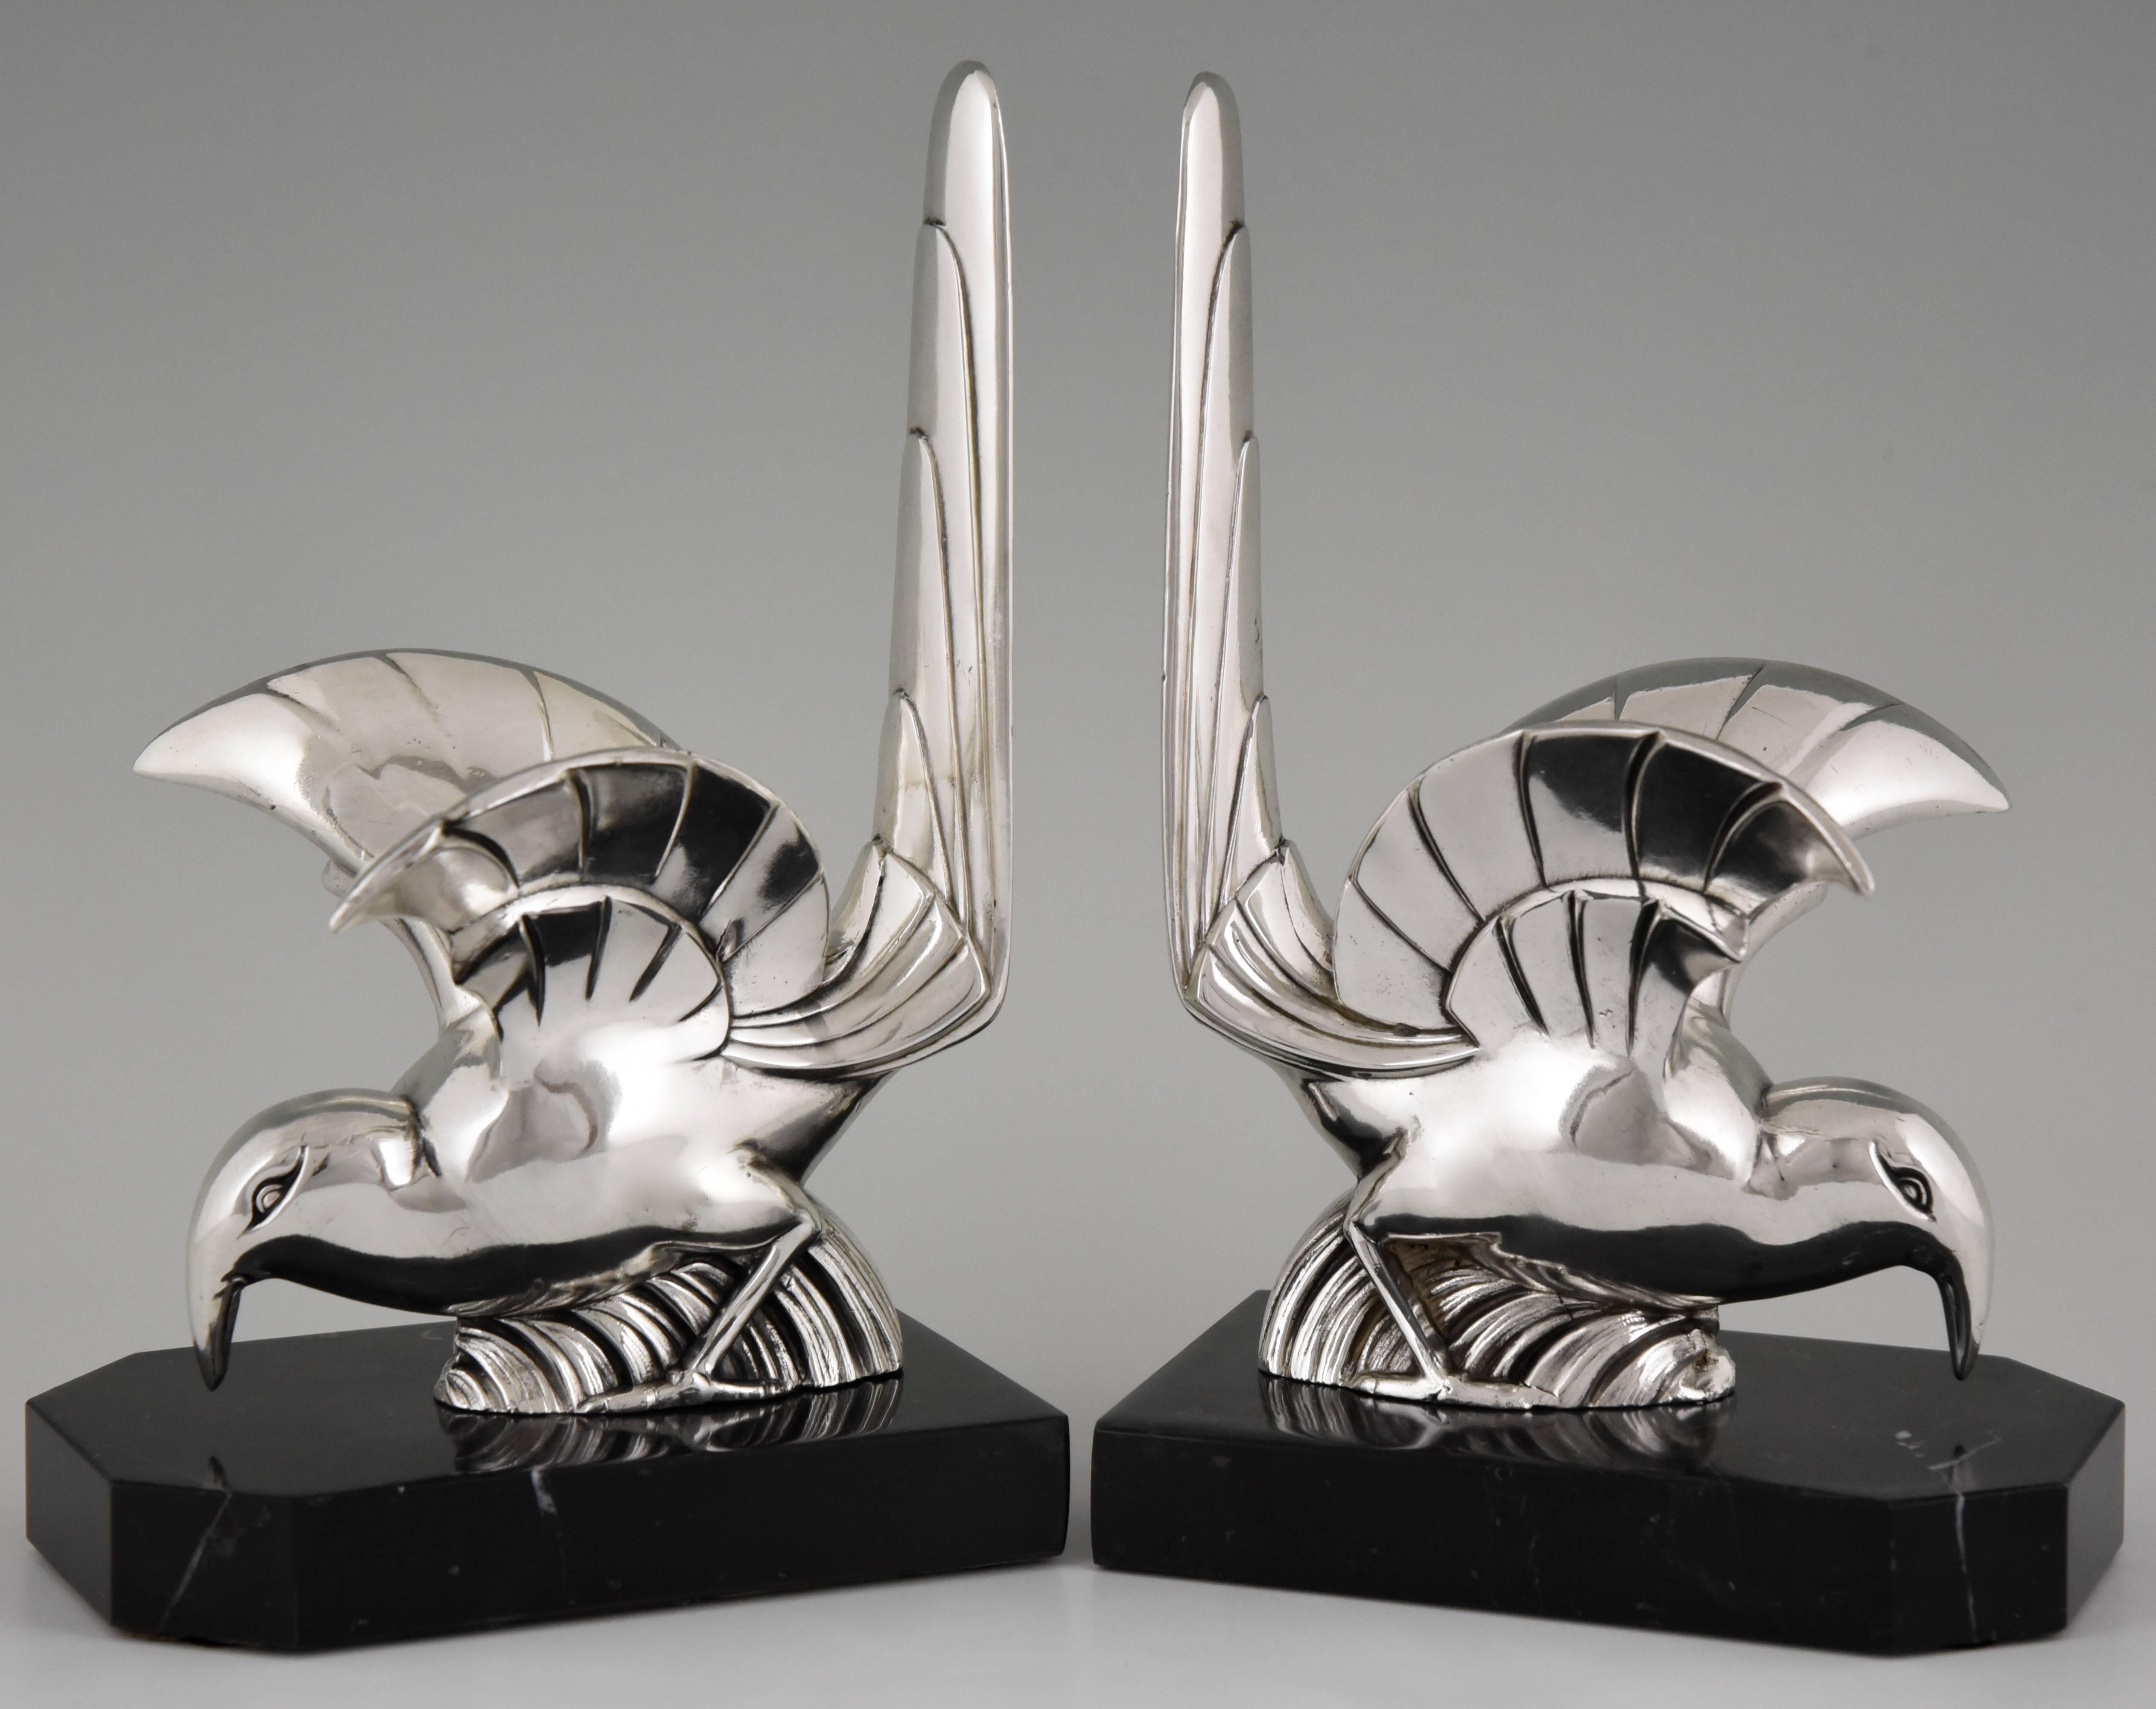 Artist/ Maker: F.H. Danvin
Signature/ Marks: Danvin
Style: Art Deco
Date: 1930
Material: Silvered art metal on black marble base.
Origin: France.
Size: H 20.5 cm x L 13 cm. x W 8 cm.
H. 8 inch. x L. 5.1 inch. x W. 3.1 inch.
Condition: